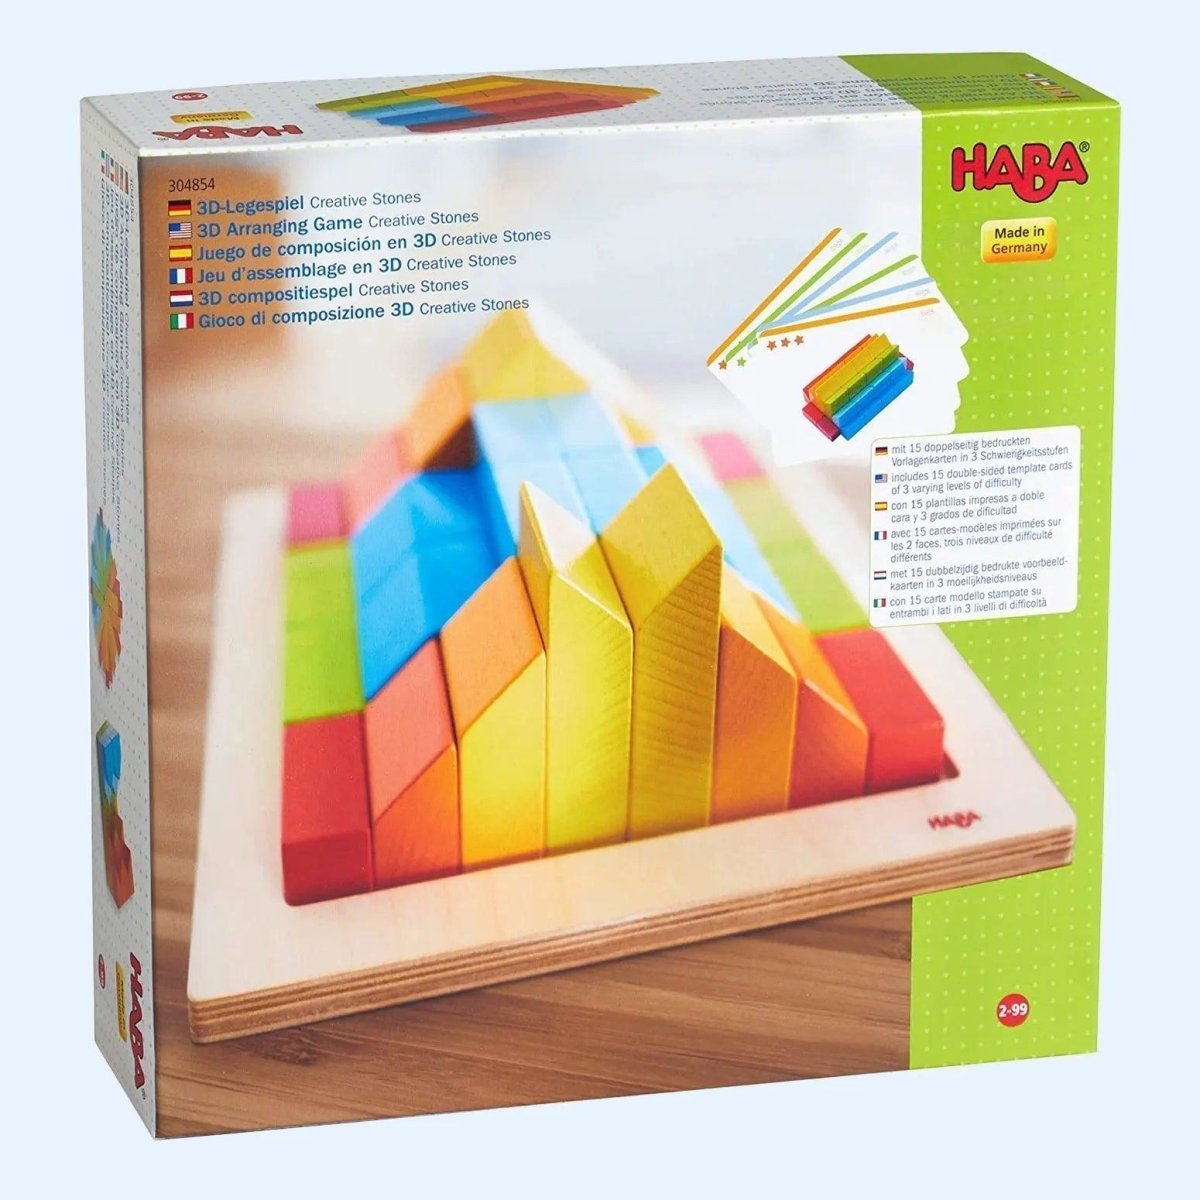 3D Wooden Blocks Arranging & Sorting Game - Zidar Kid